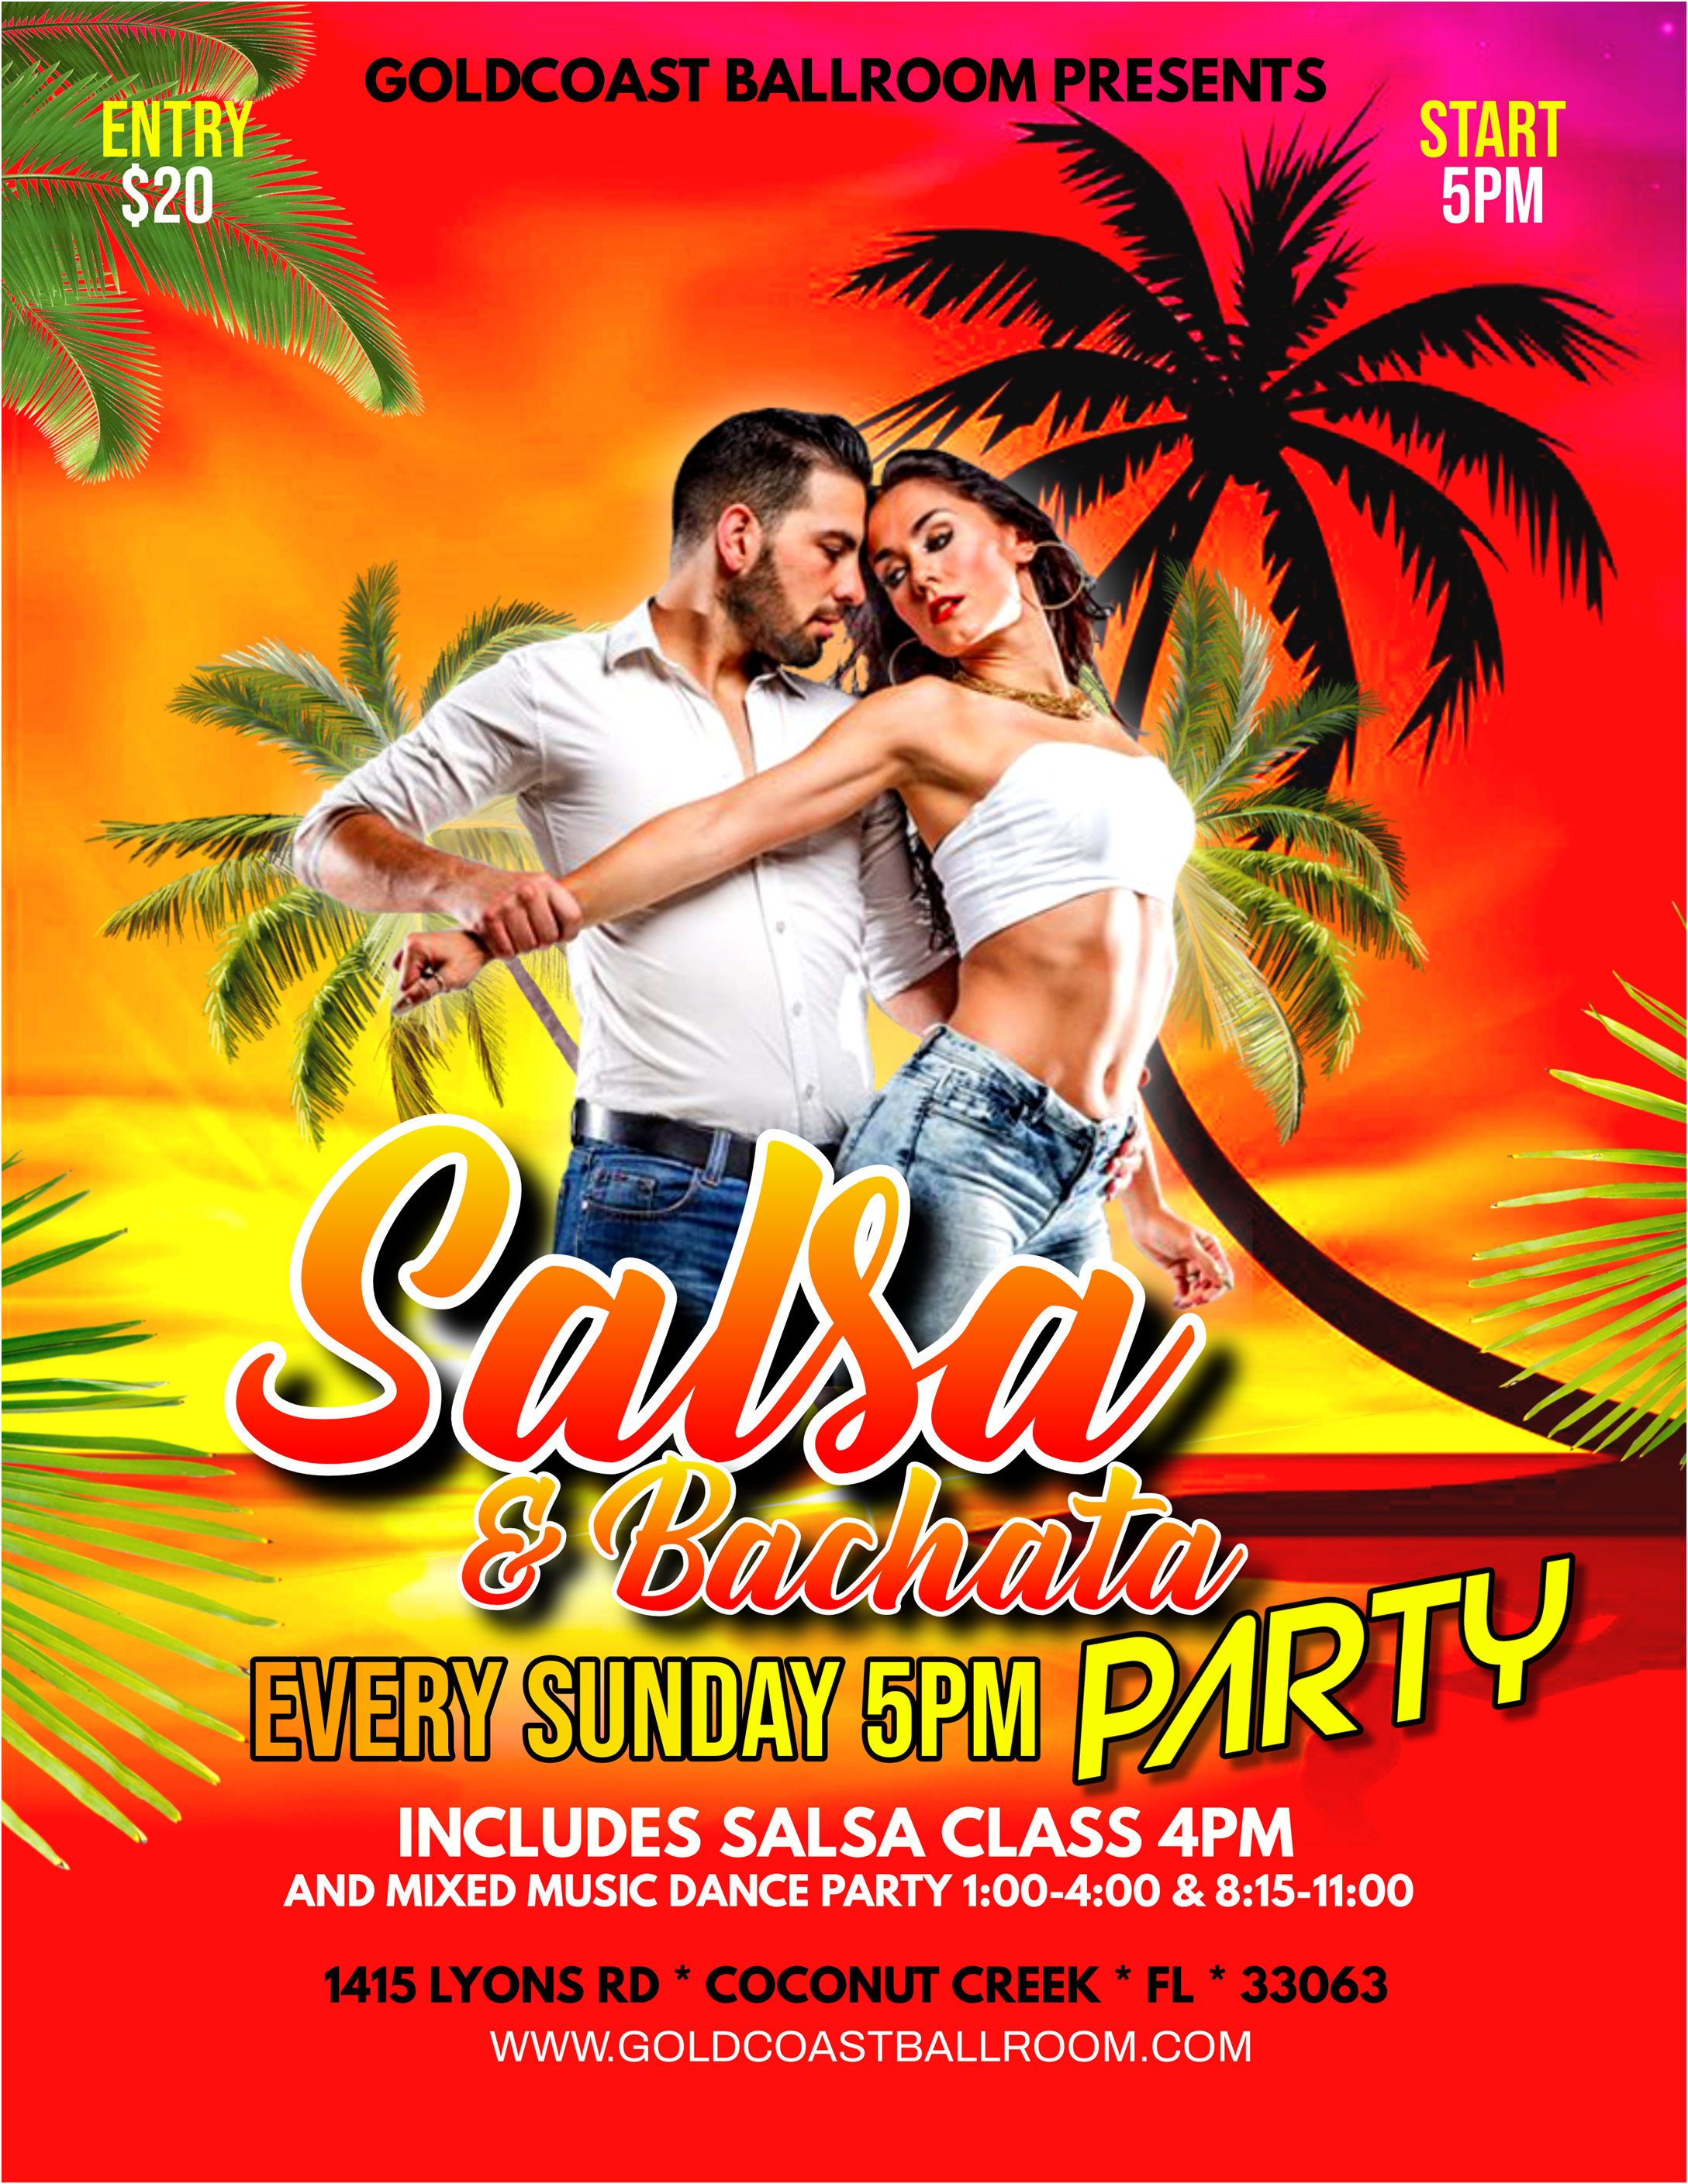 Every Sunday at Goldcoast Ballroom - Salsa & Bachata Party, Class & Mixed Music Dances